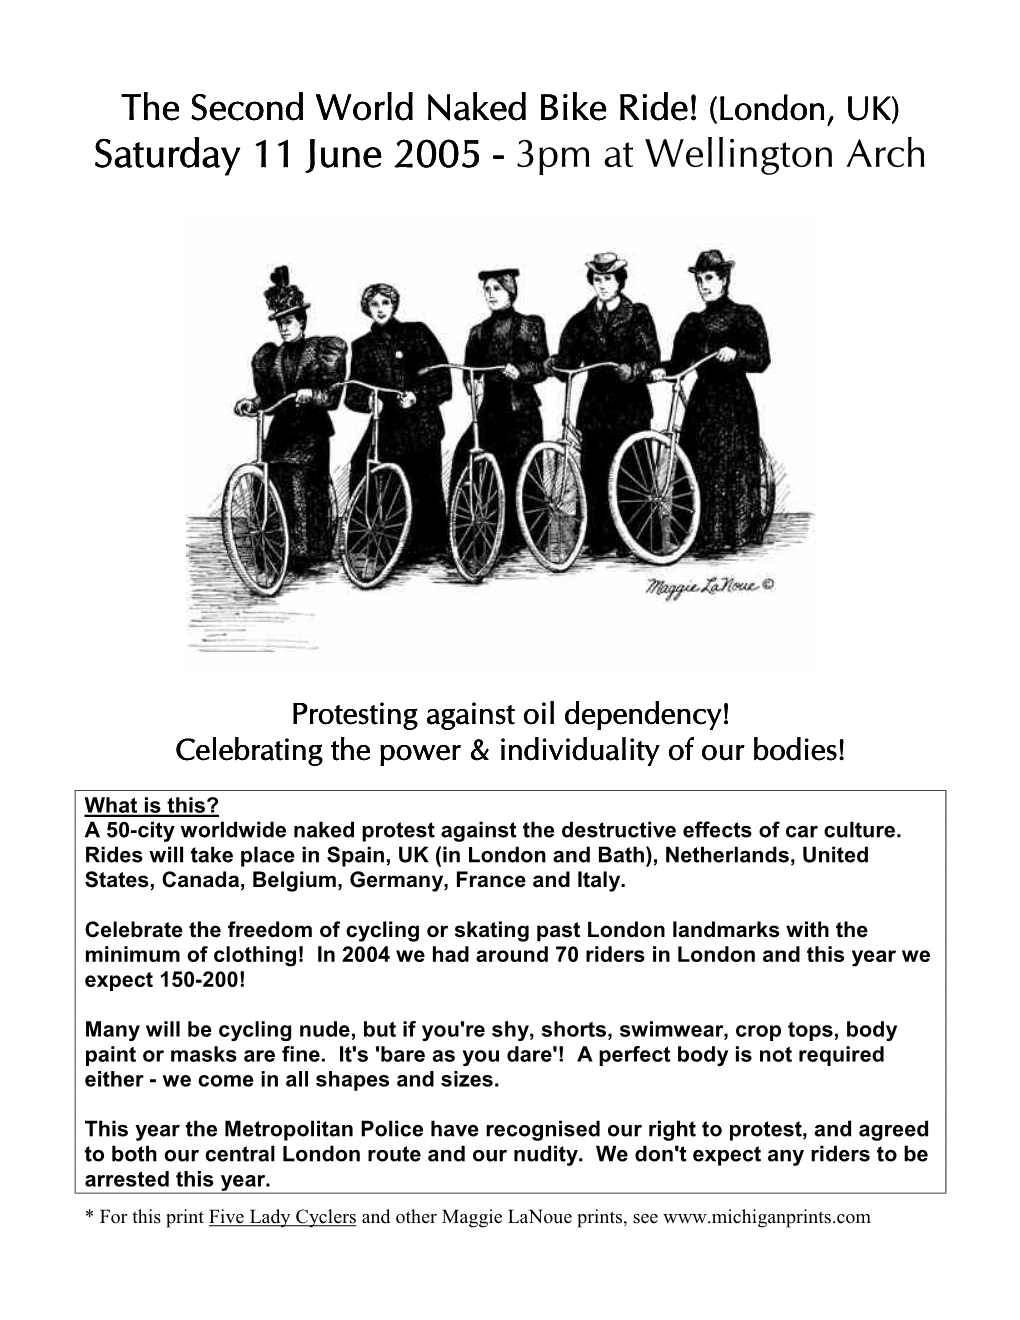 World Naked Bike Ride! ((London,London, UKUK)) Saturday 11 June 2005 - 3Pm at Wellington Arch